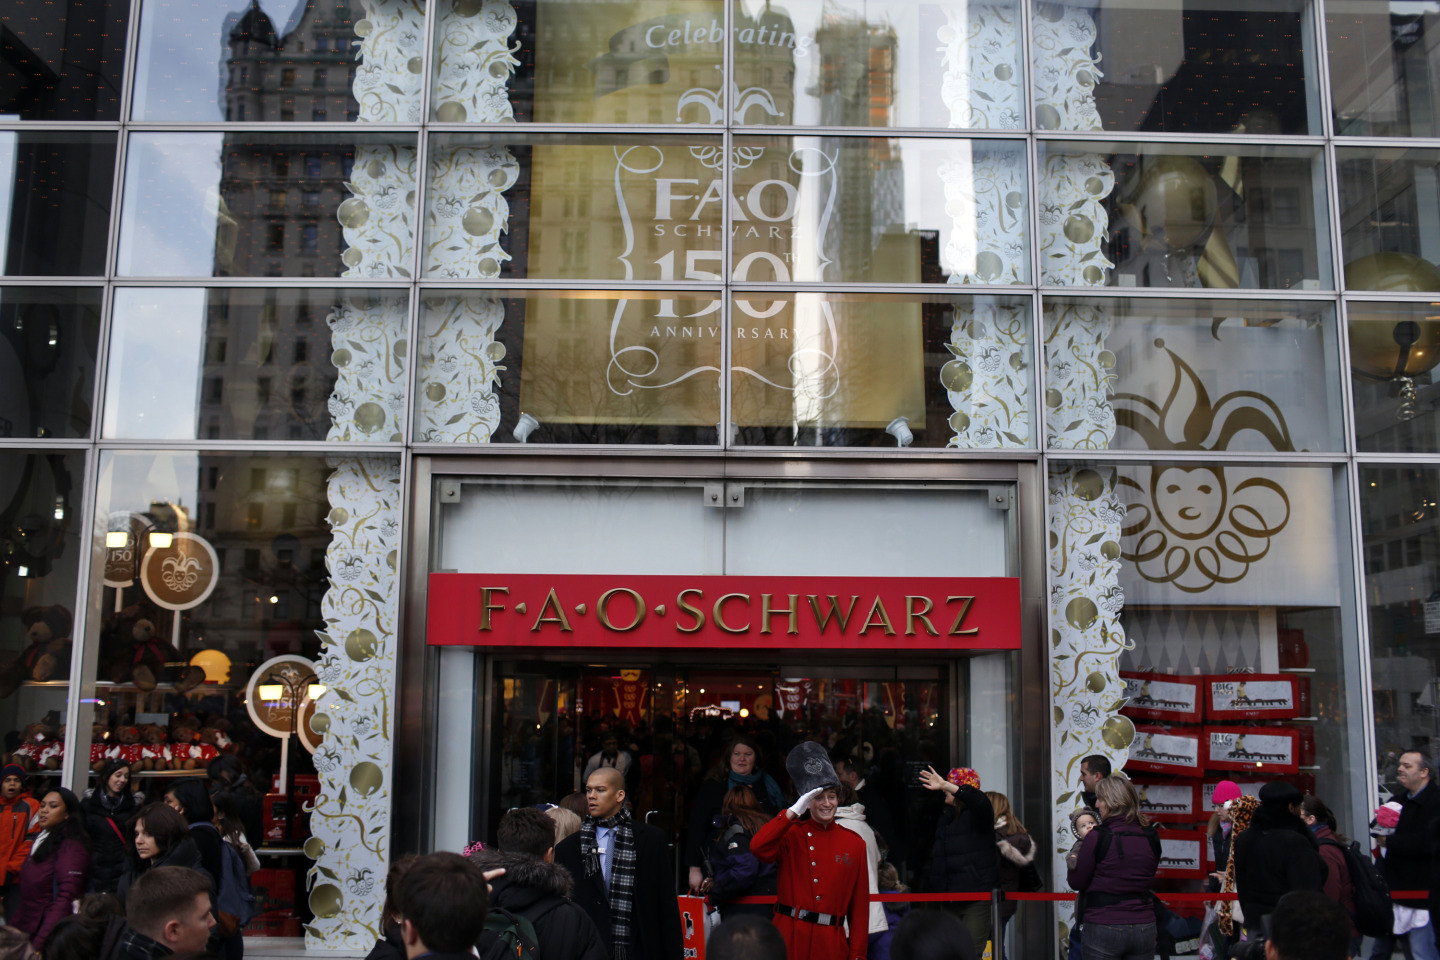 FAO Schwarz, Iconic Toy Store, Big Piano Mat, Rockefeller Plaza